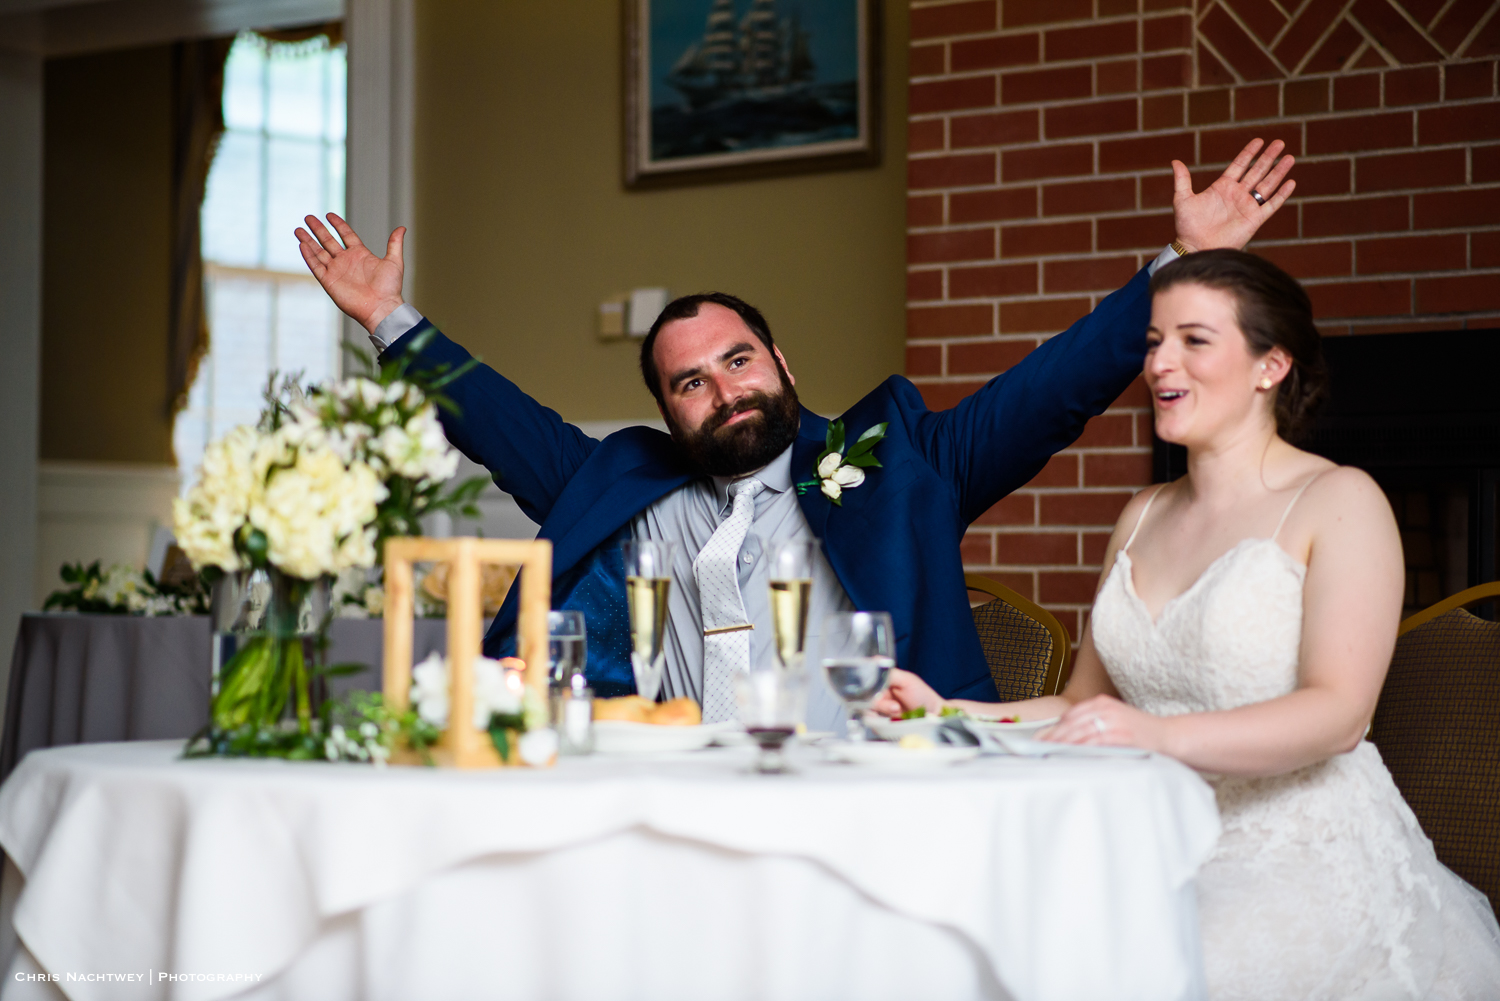 wedding-photos-united-states-coast-guard-academy-chris-nachtwey-photography-2019-30.jpg